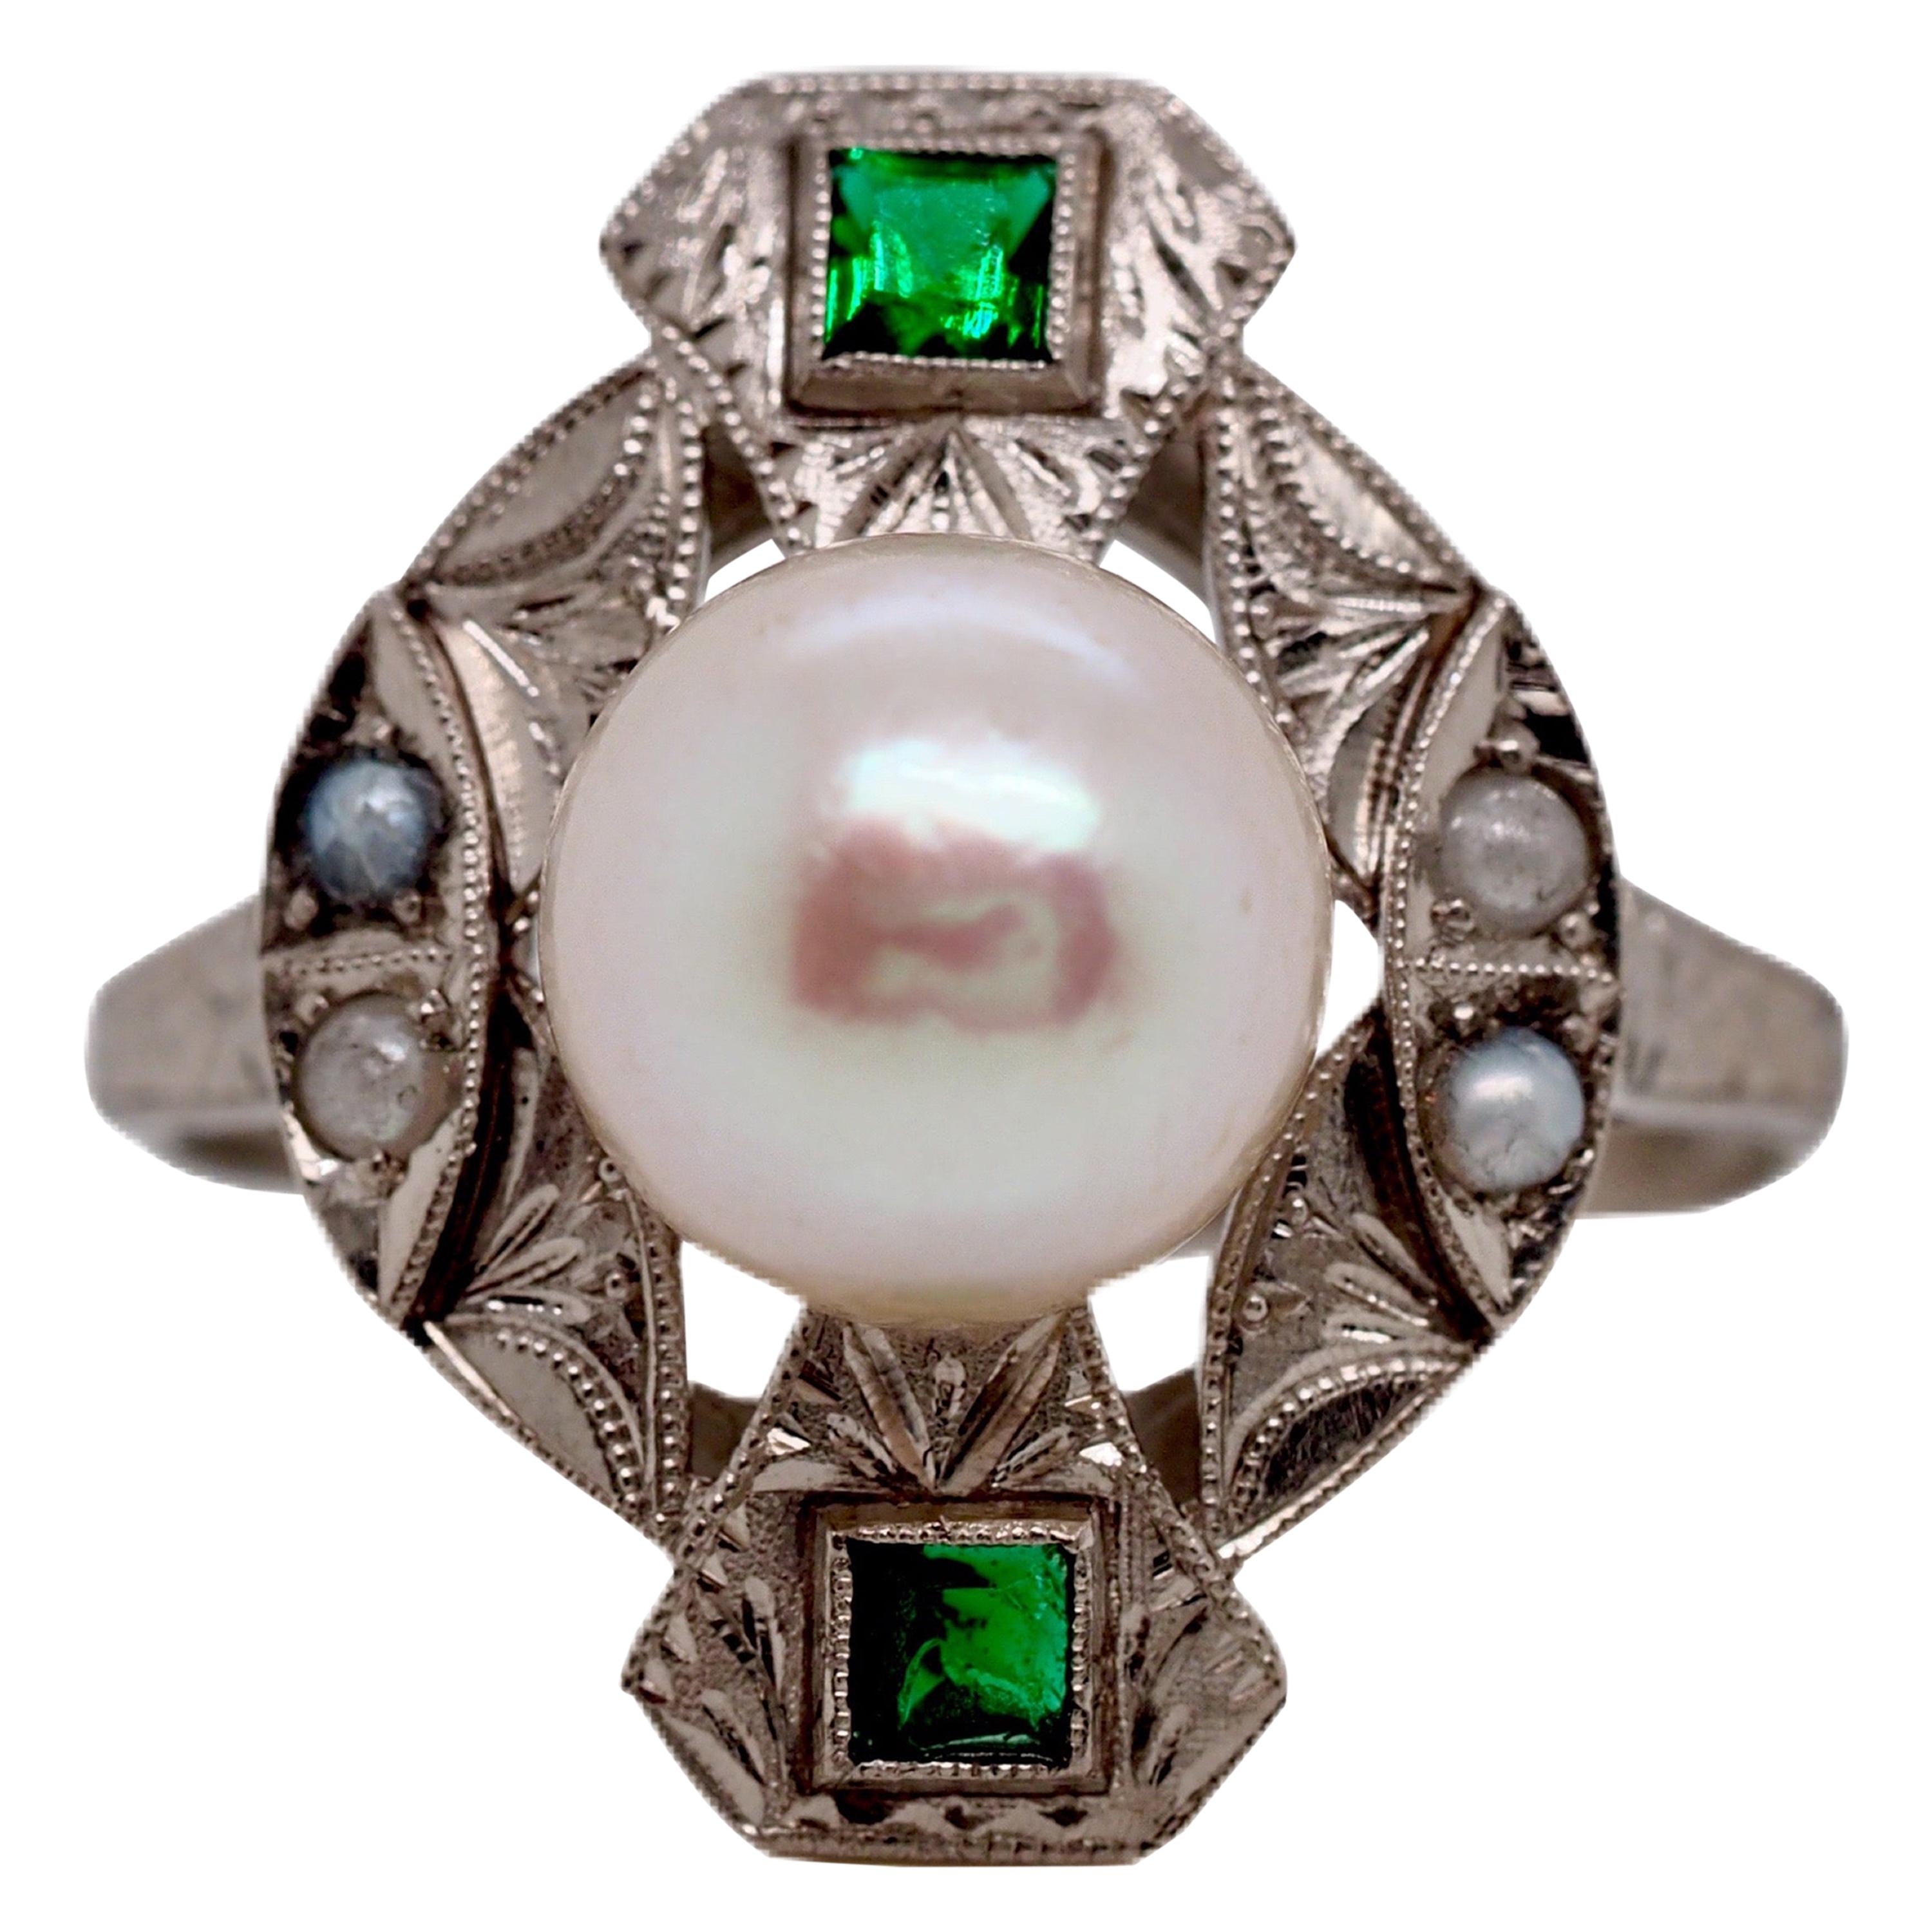 Edwardian Pearl and Emerald 18 Karat Ring, circa 1900s